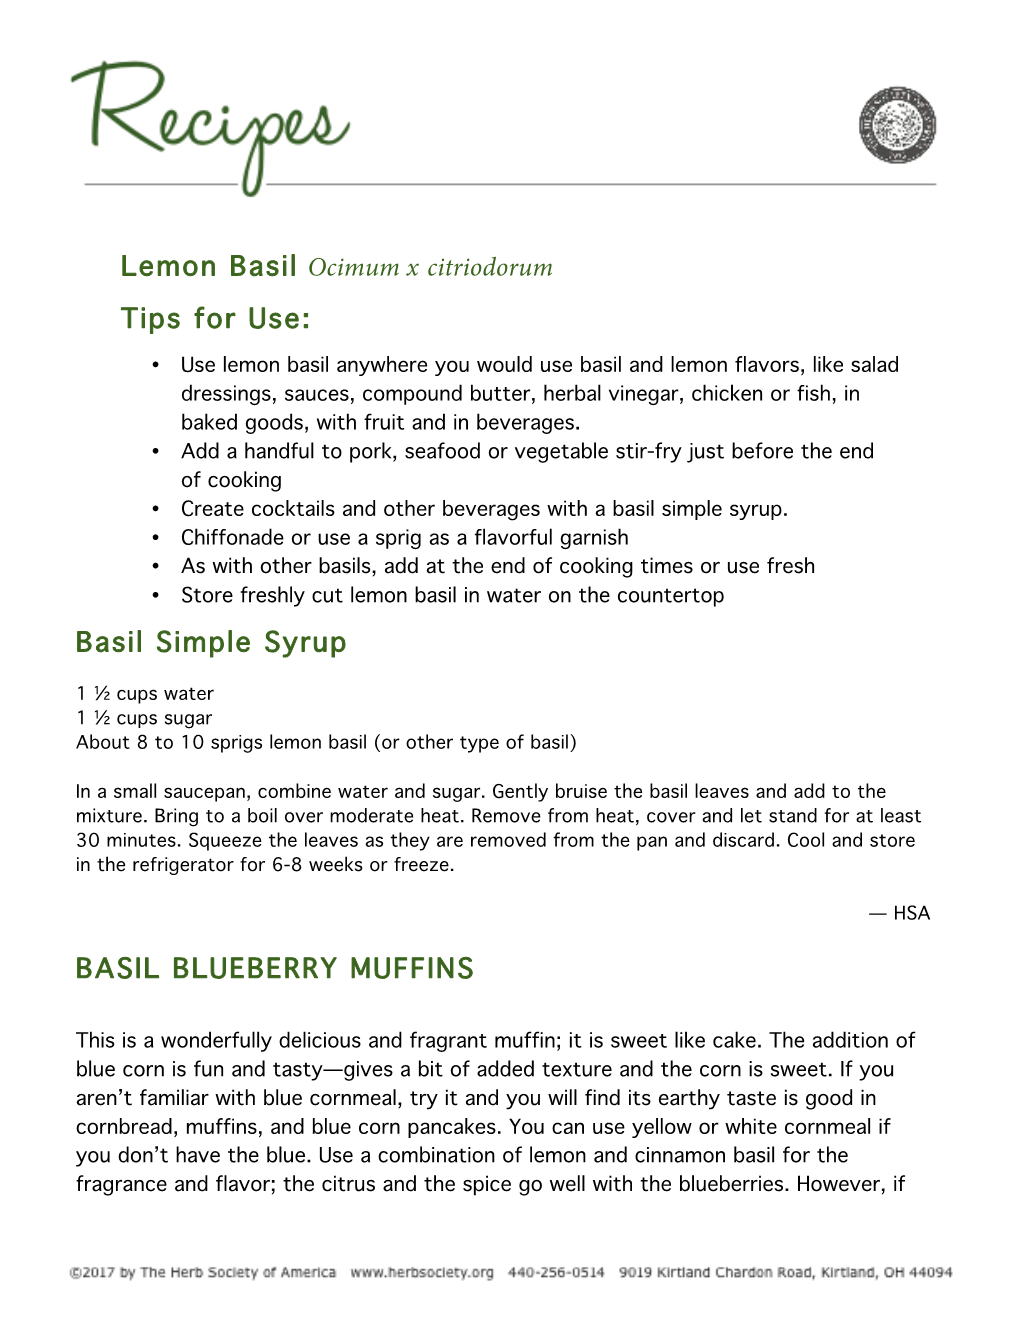 Lemon Basil Ocimum X Citriodorum Tips for Use